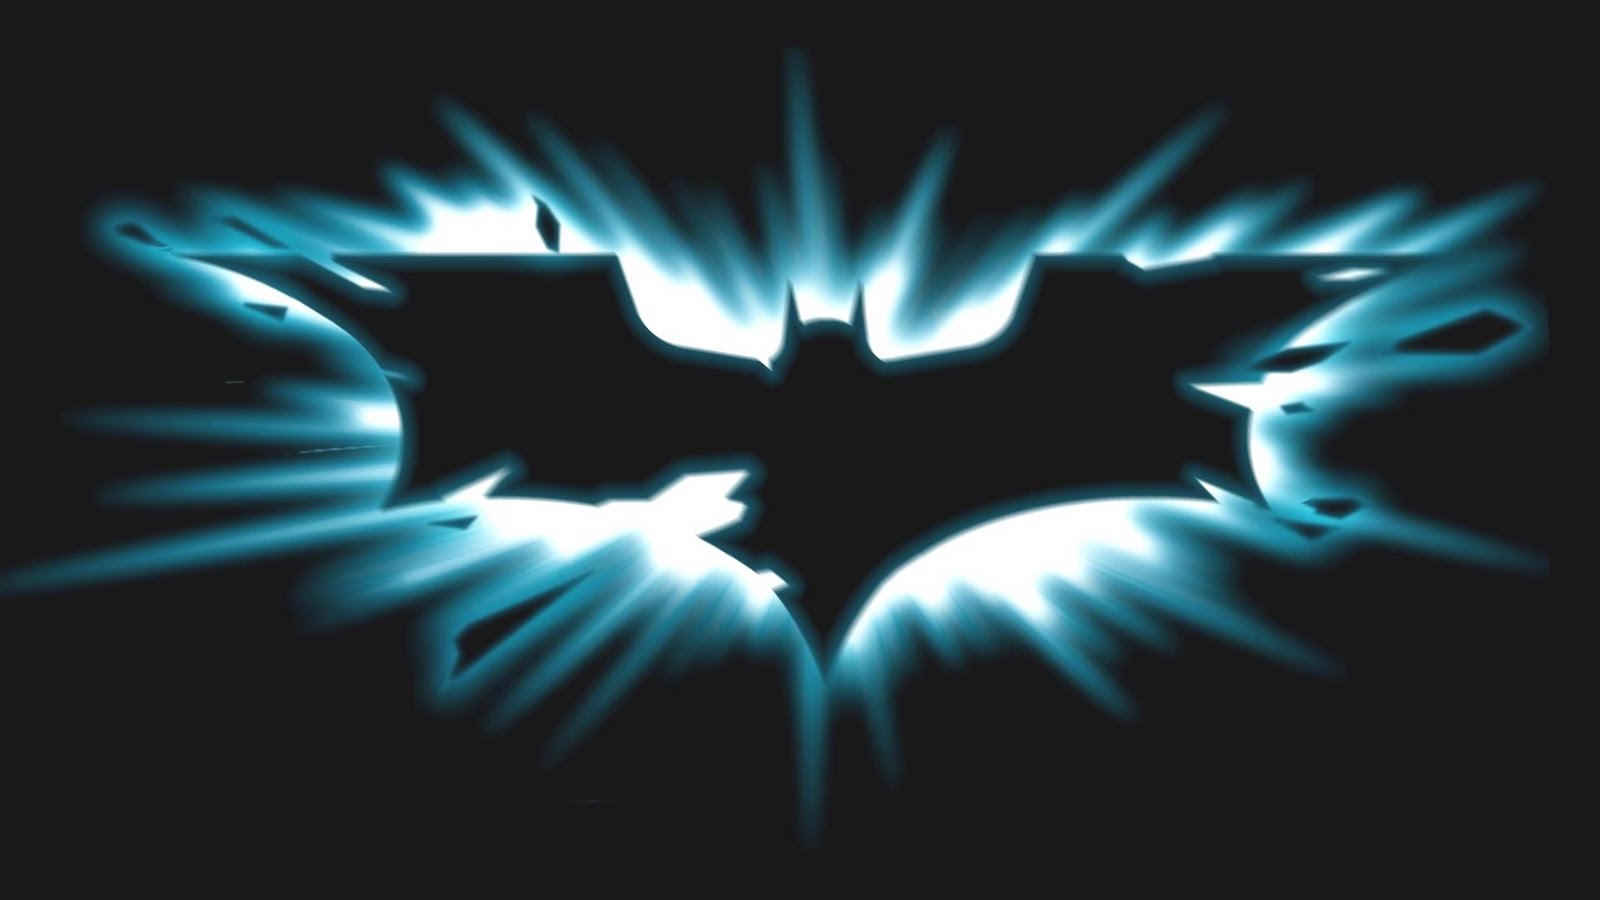 Batman Logos - New Logo Pictures